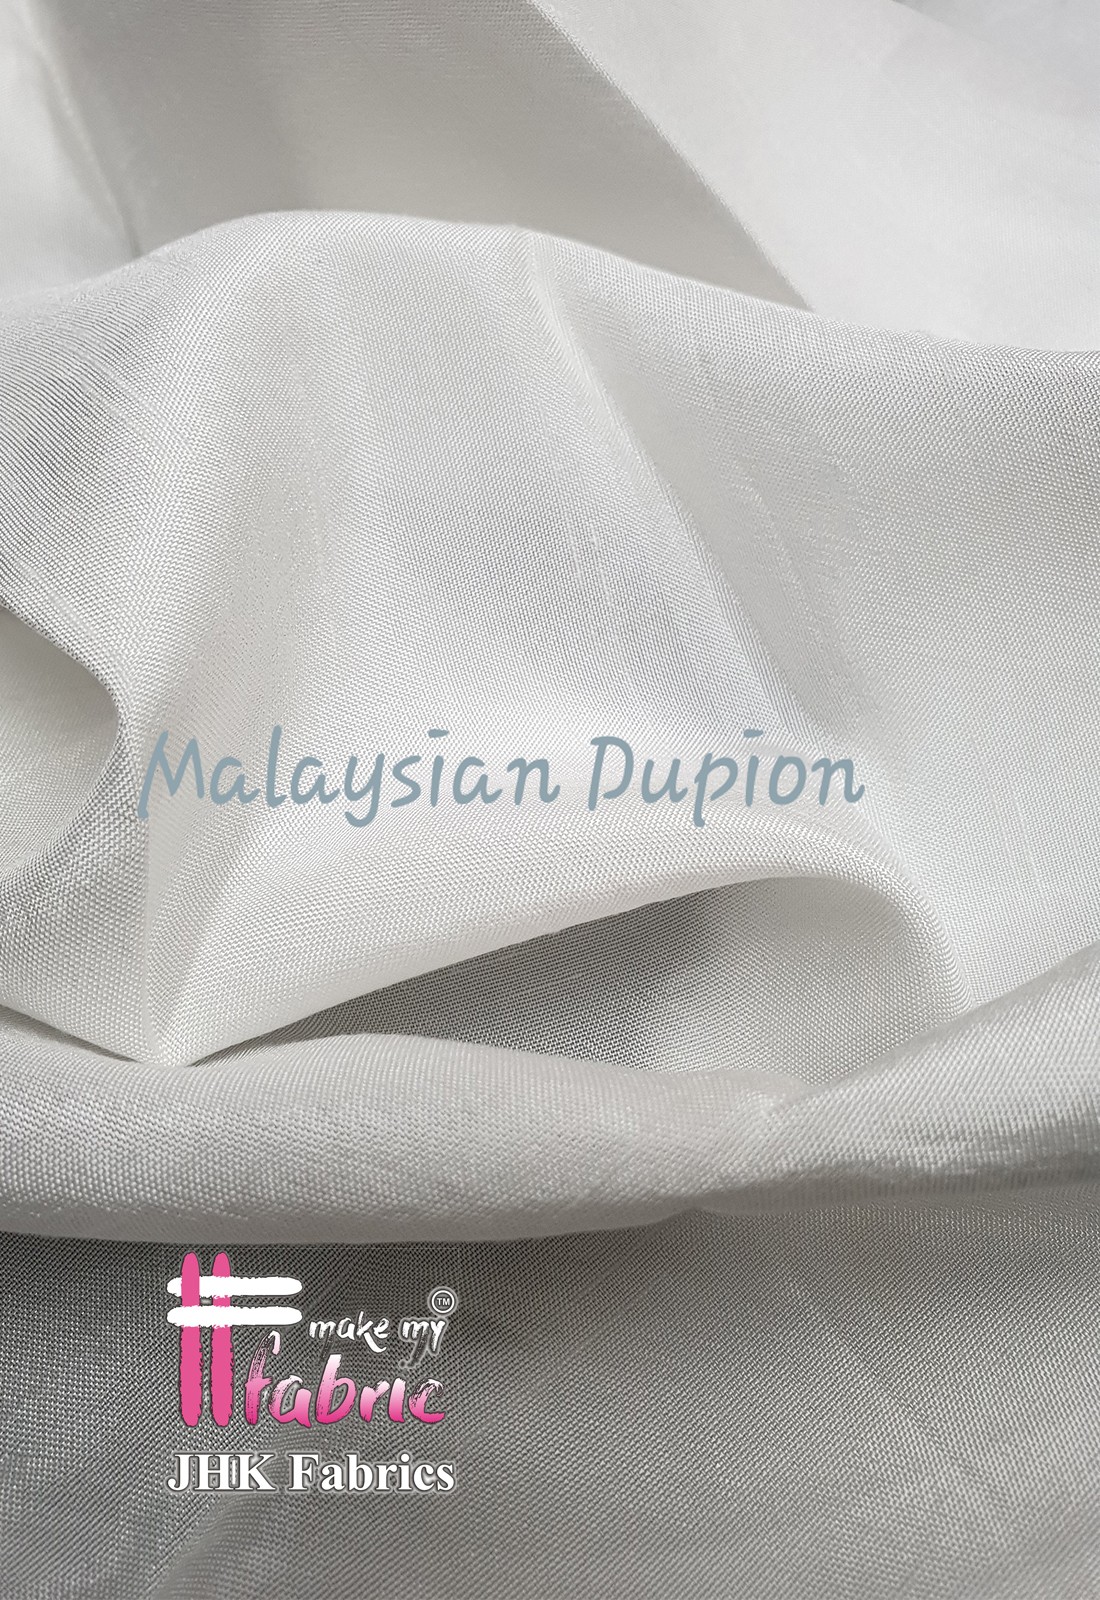 Malaysian Dupion